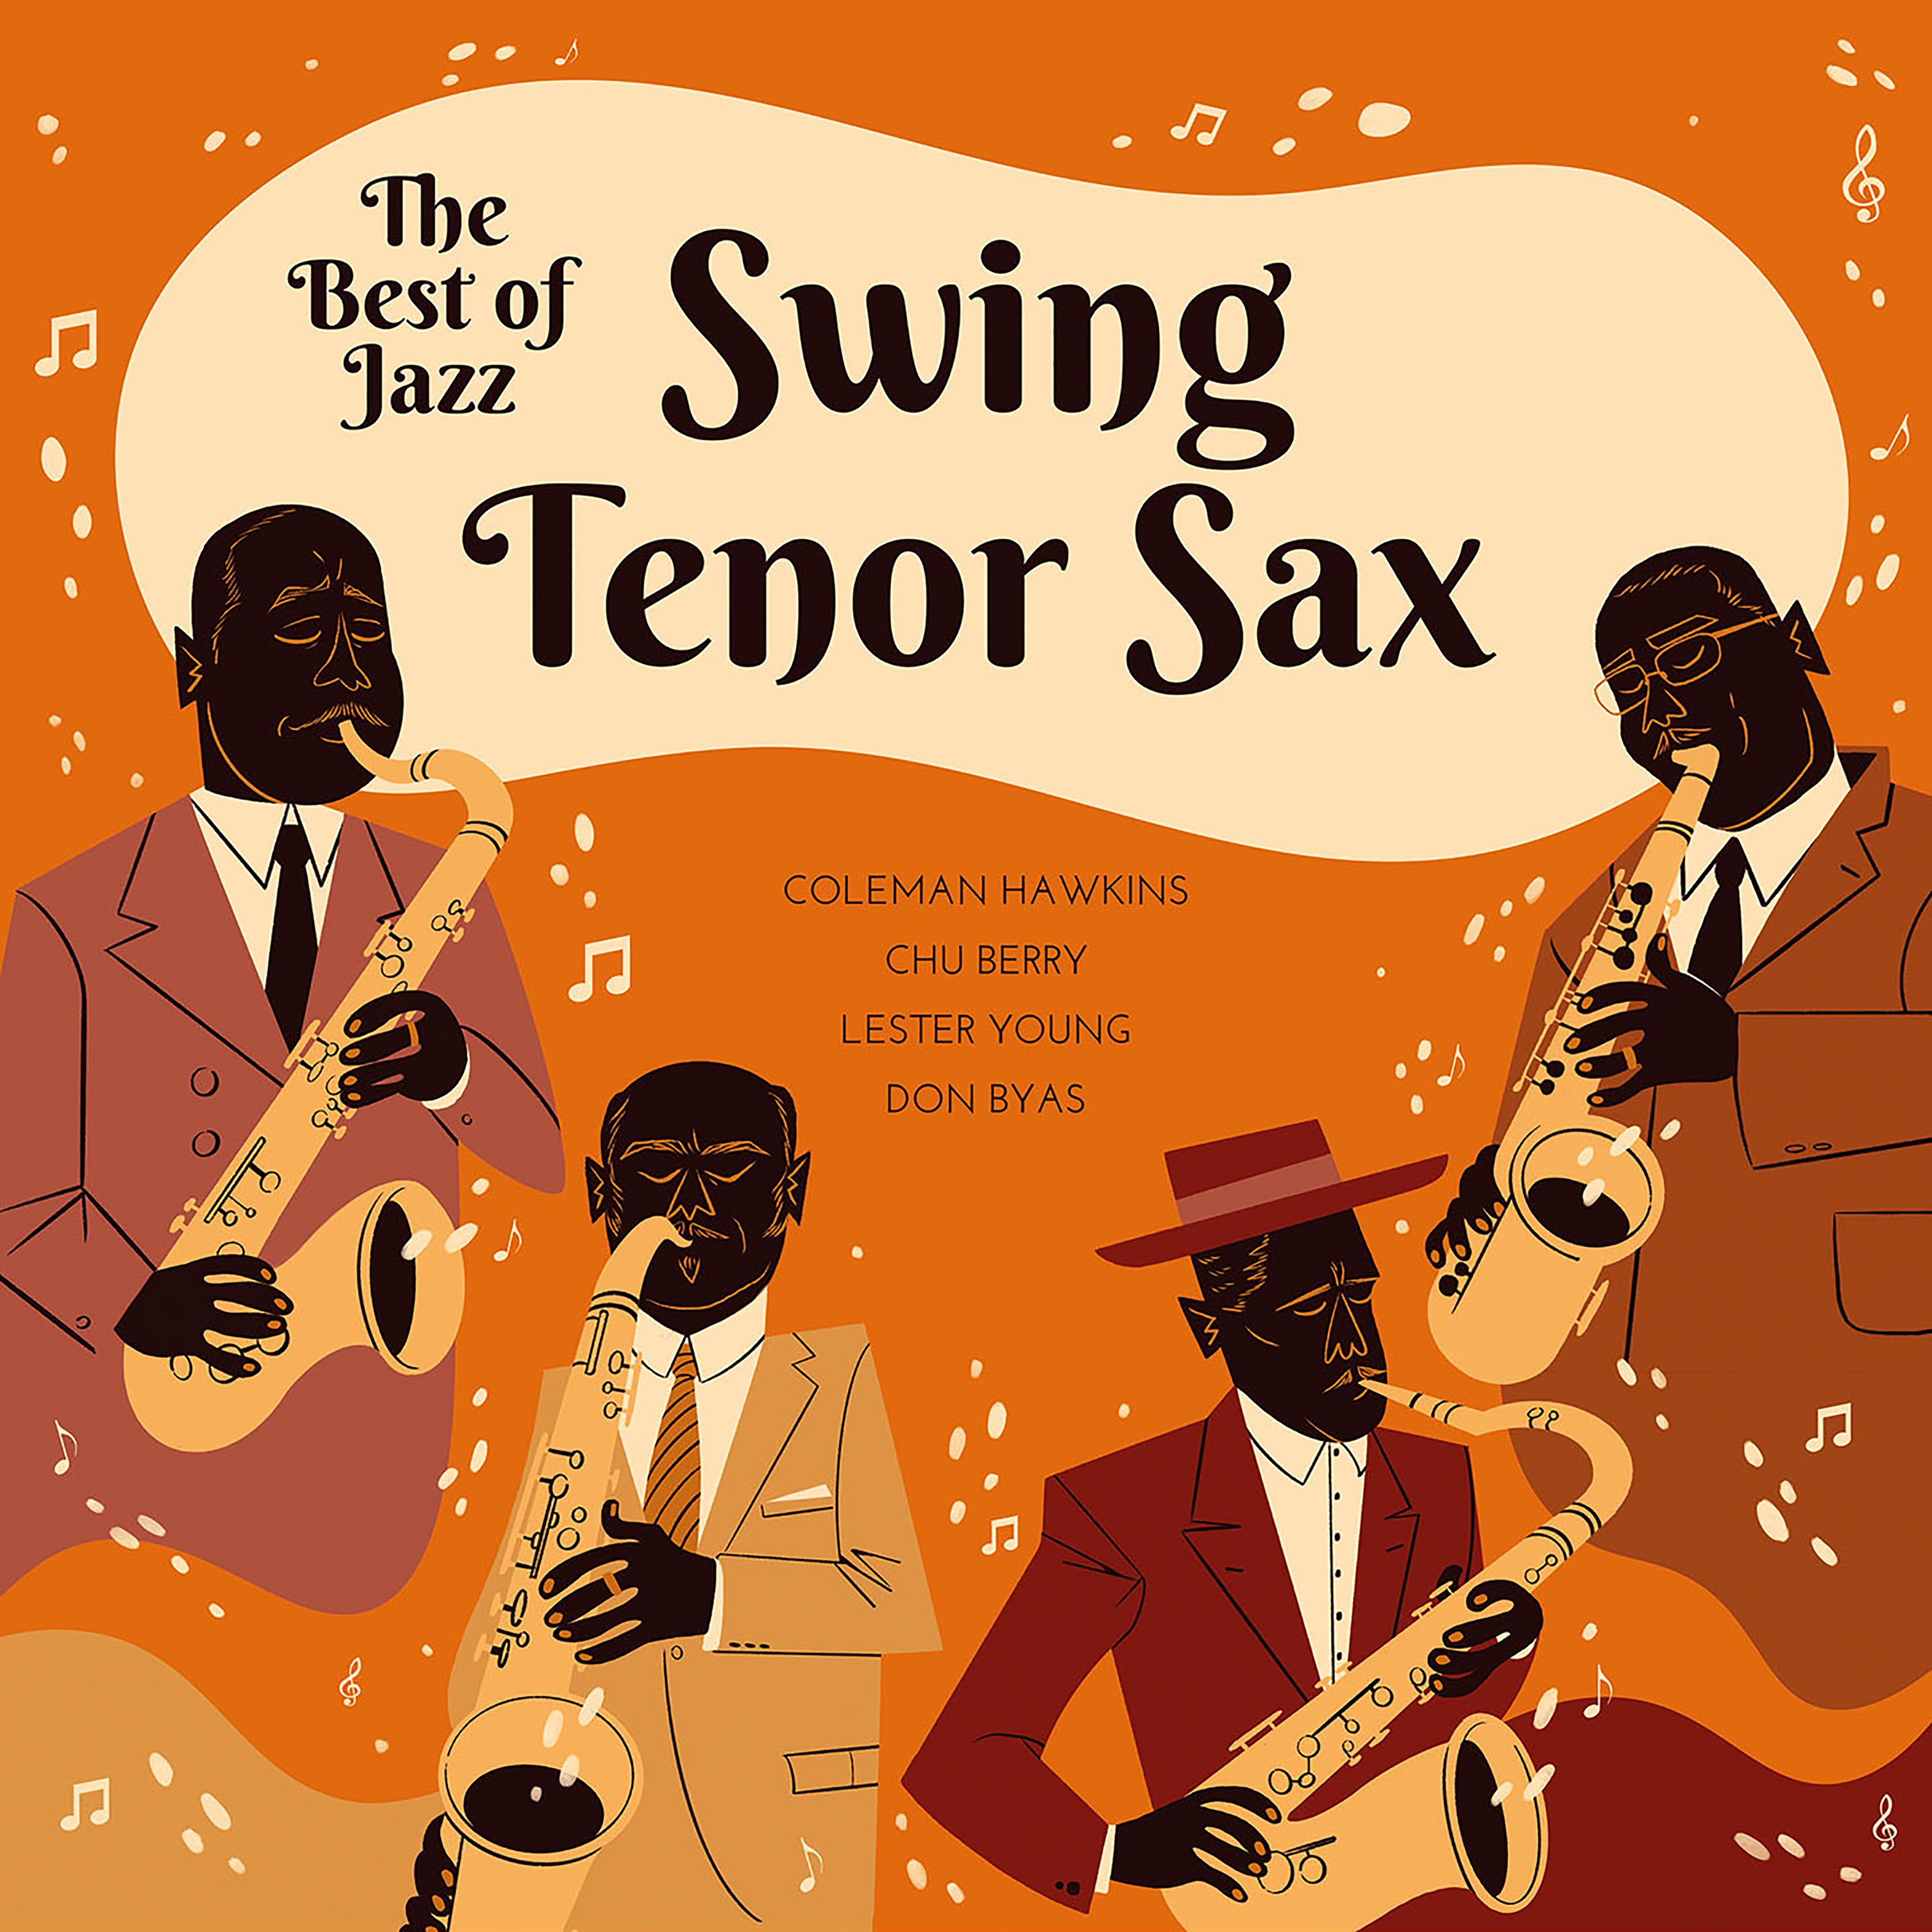 The Best of Swing Jazz - Tenor Sax